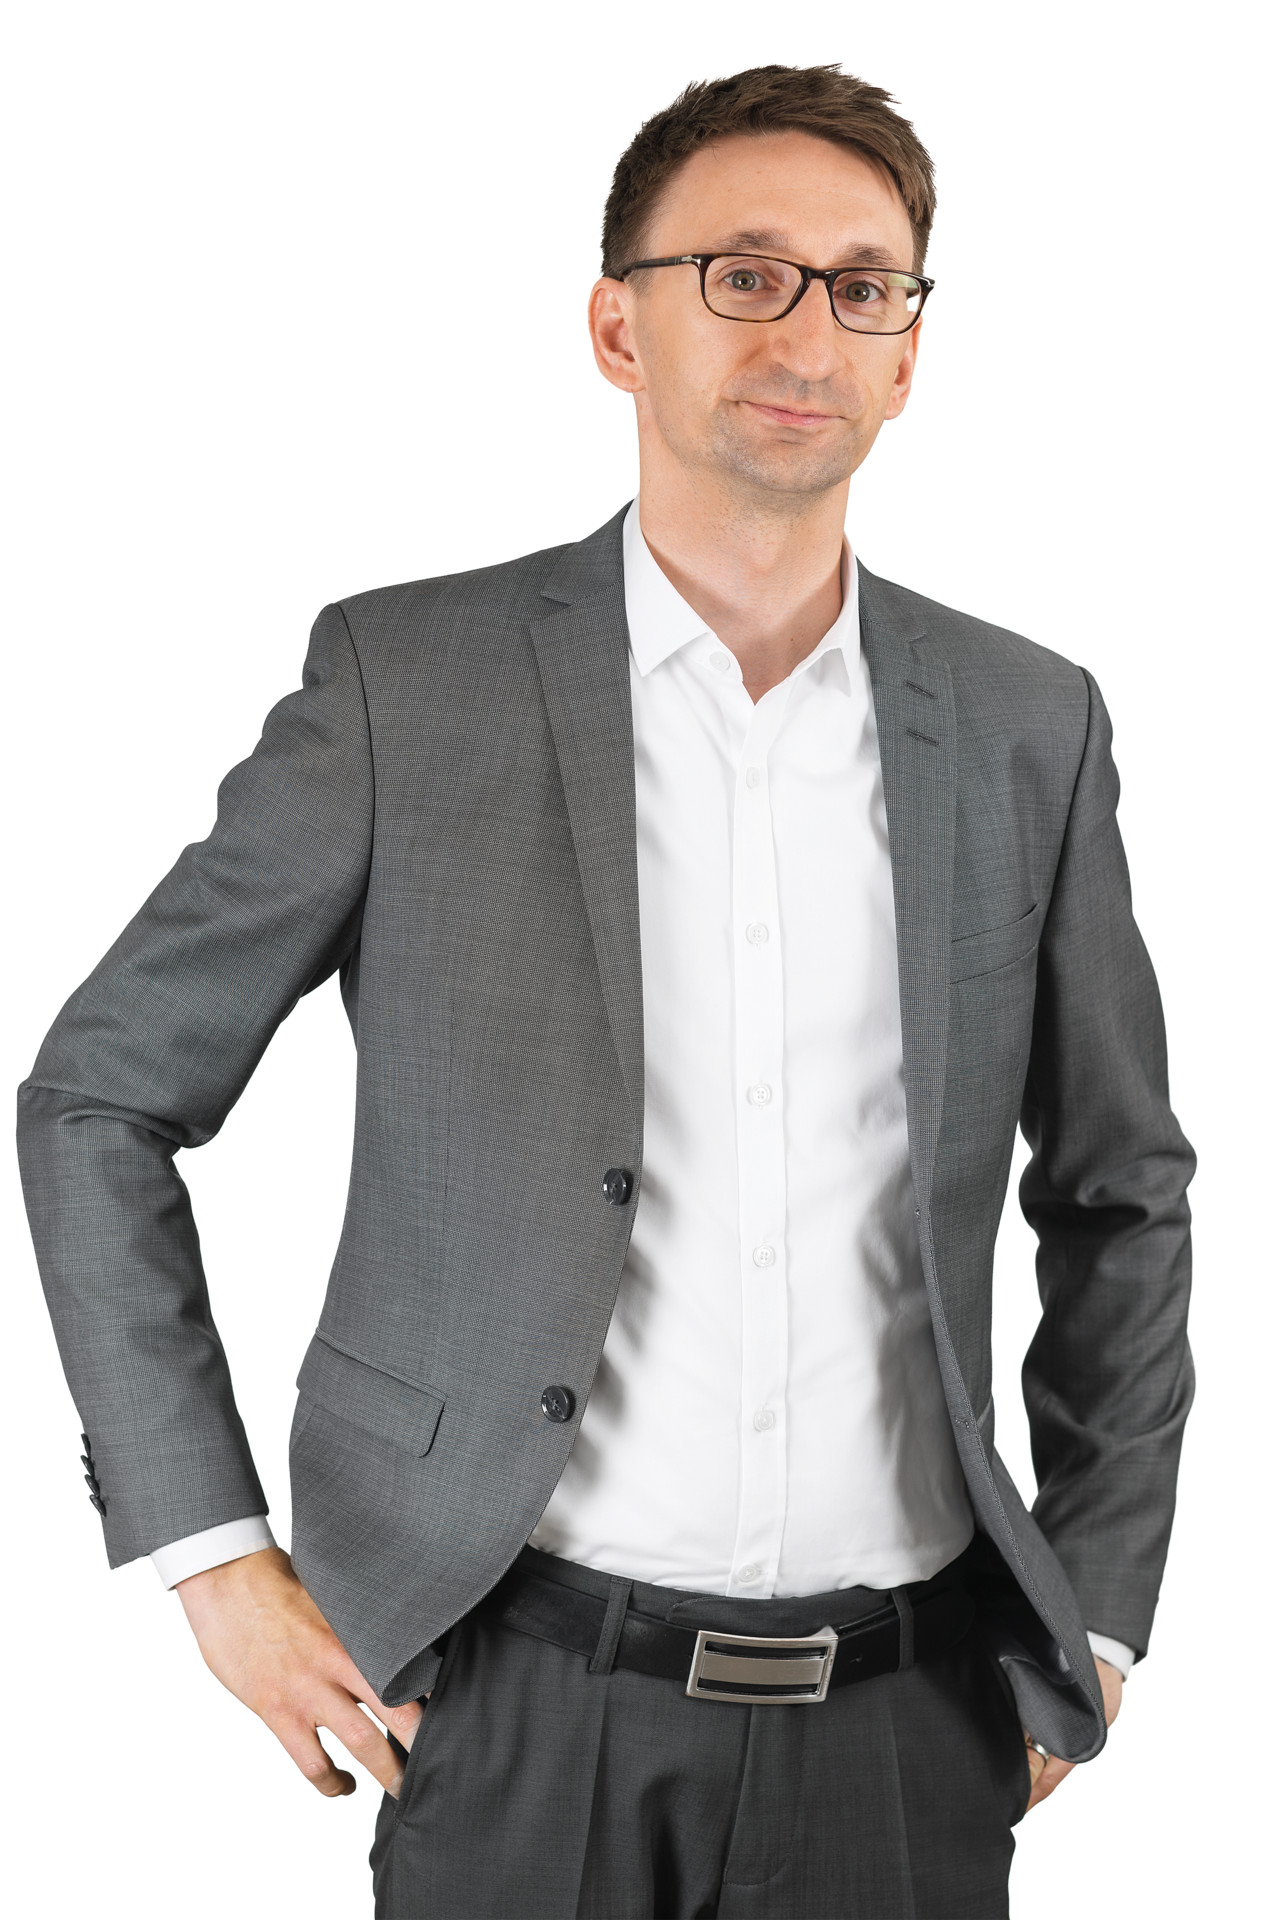 Michel Björn EFFSO managementkonsulter